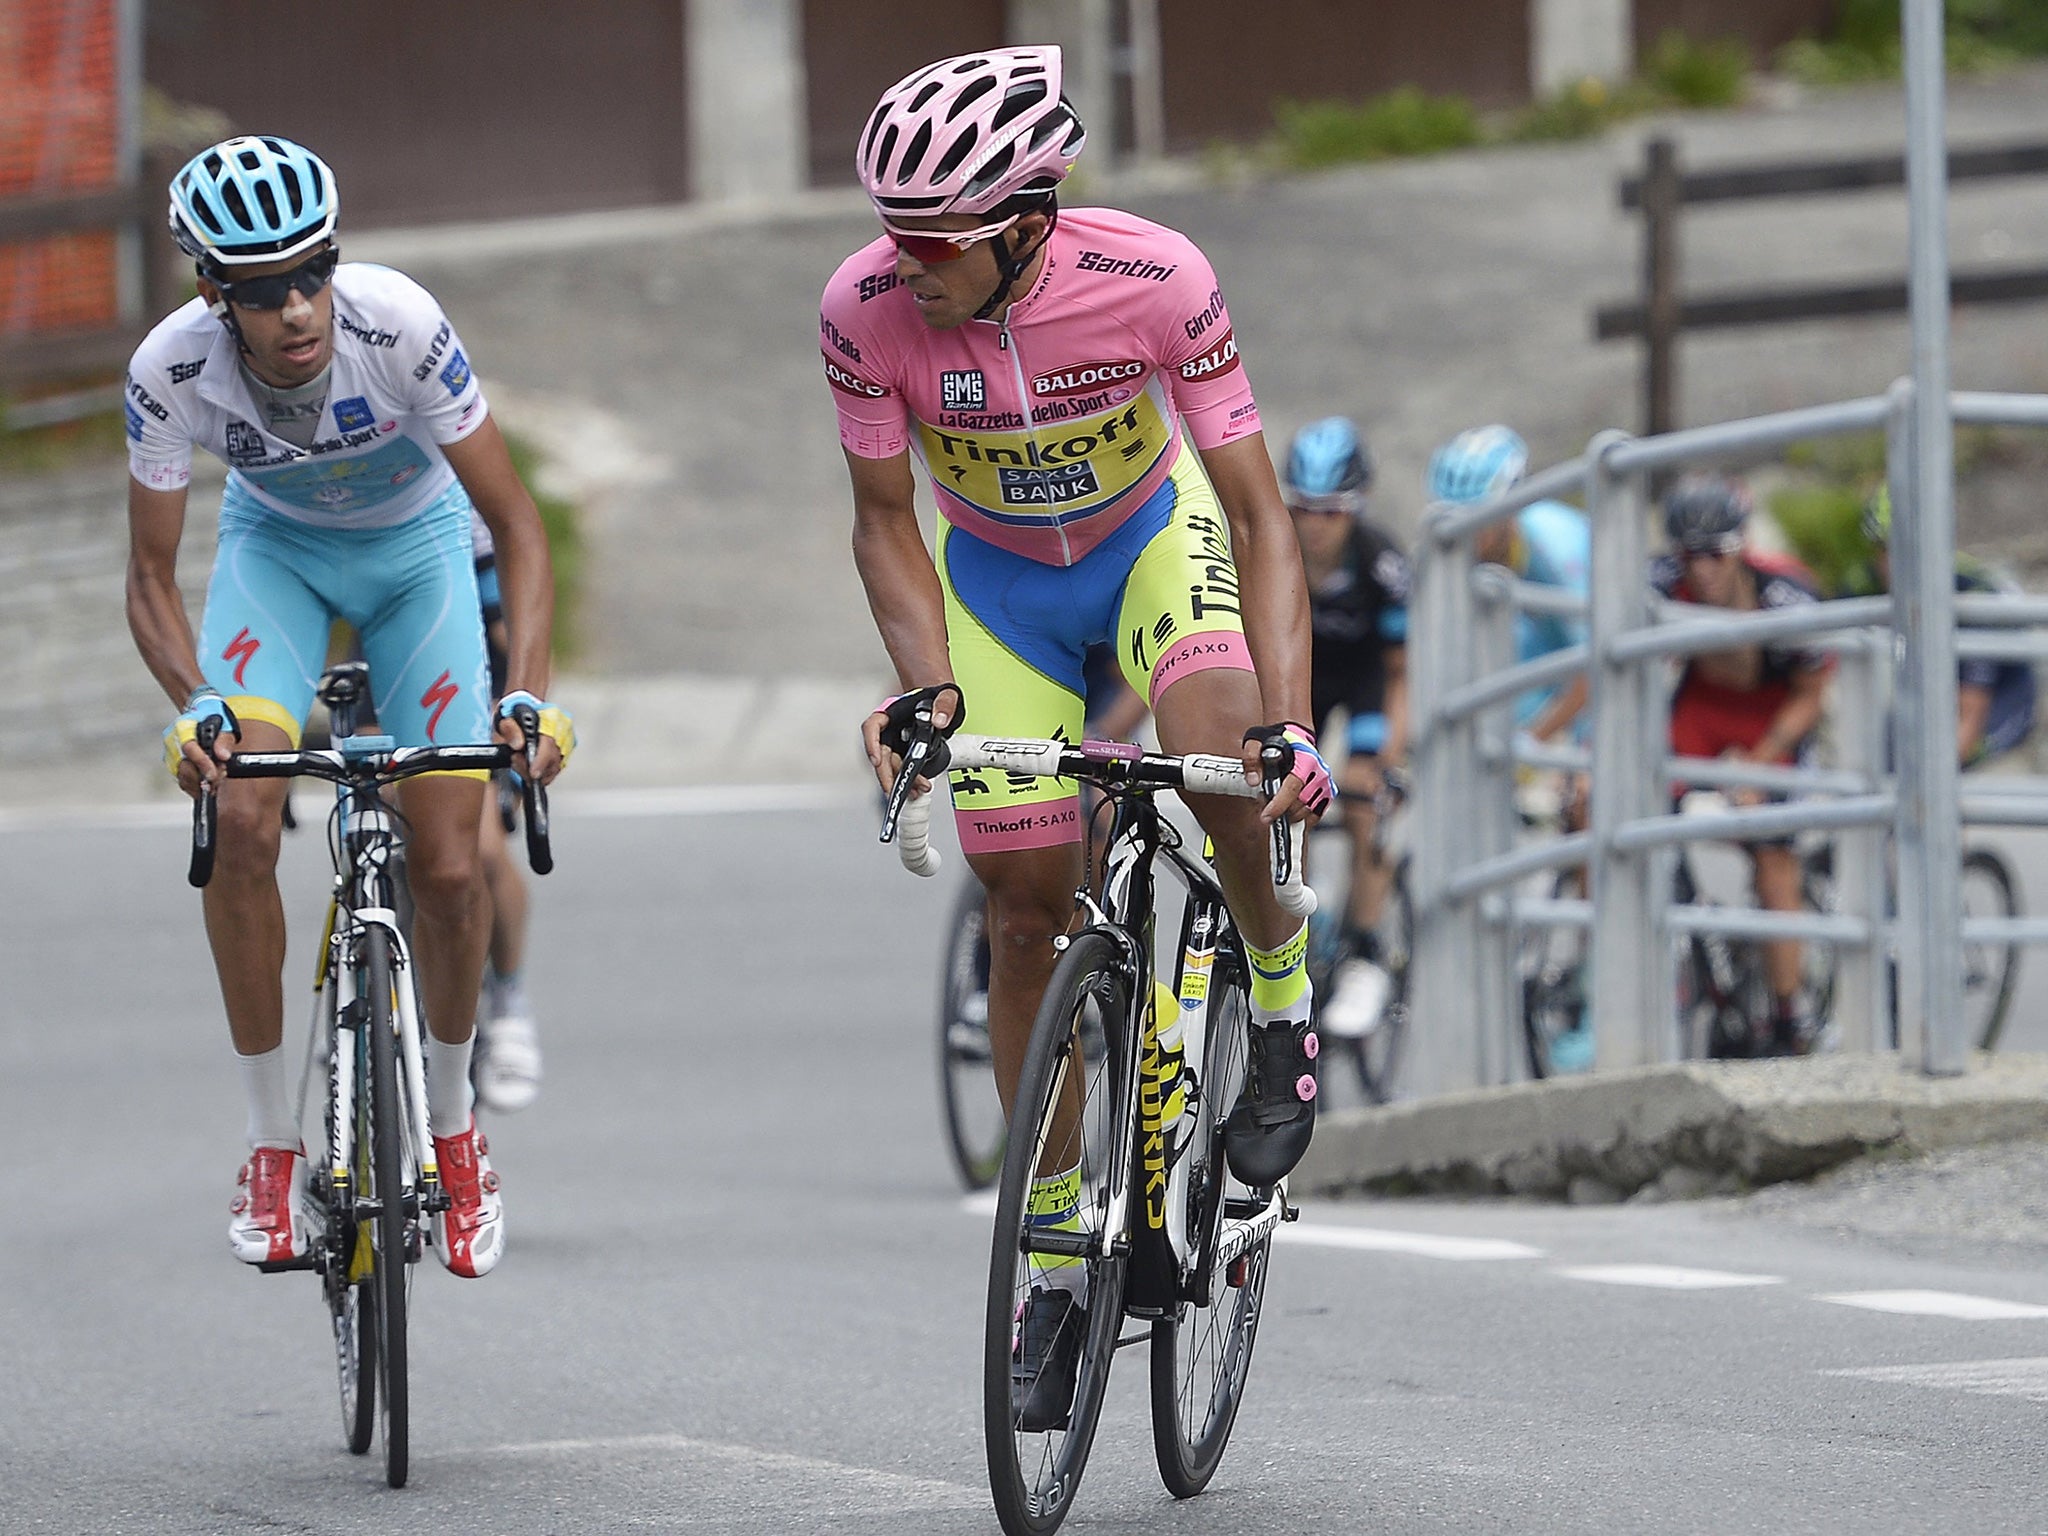 Alberto Contador (right) climbs ahead of rival Fabio Aru